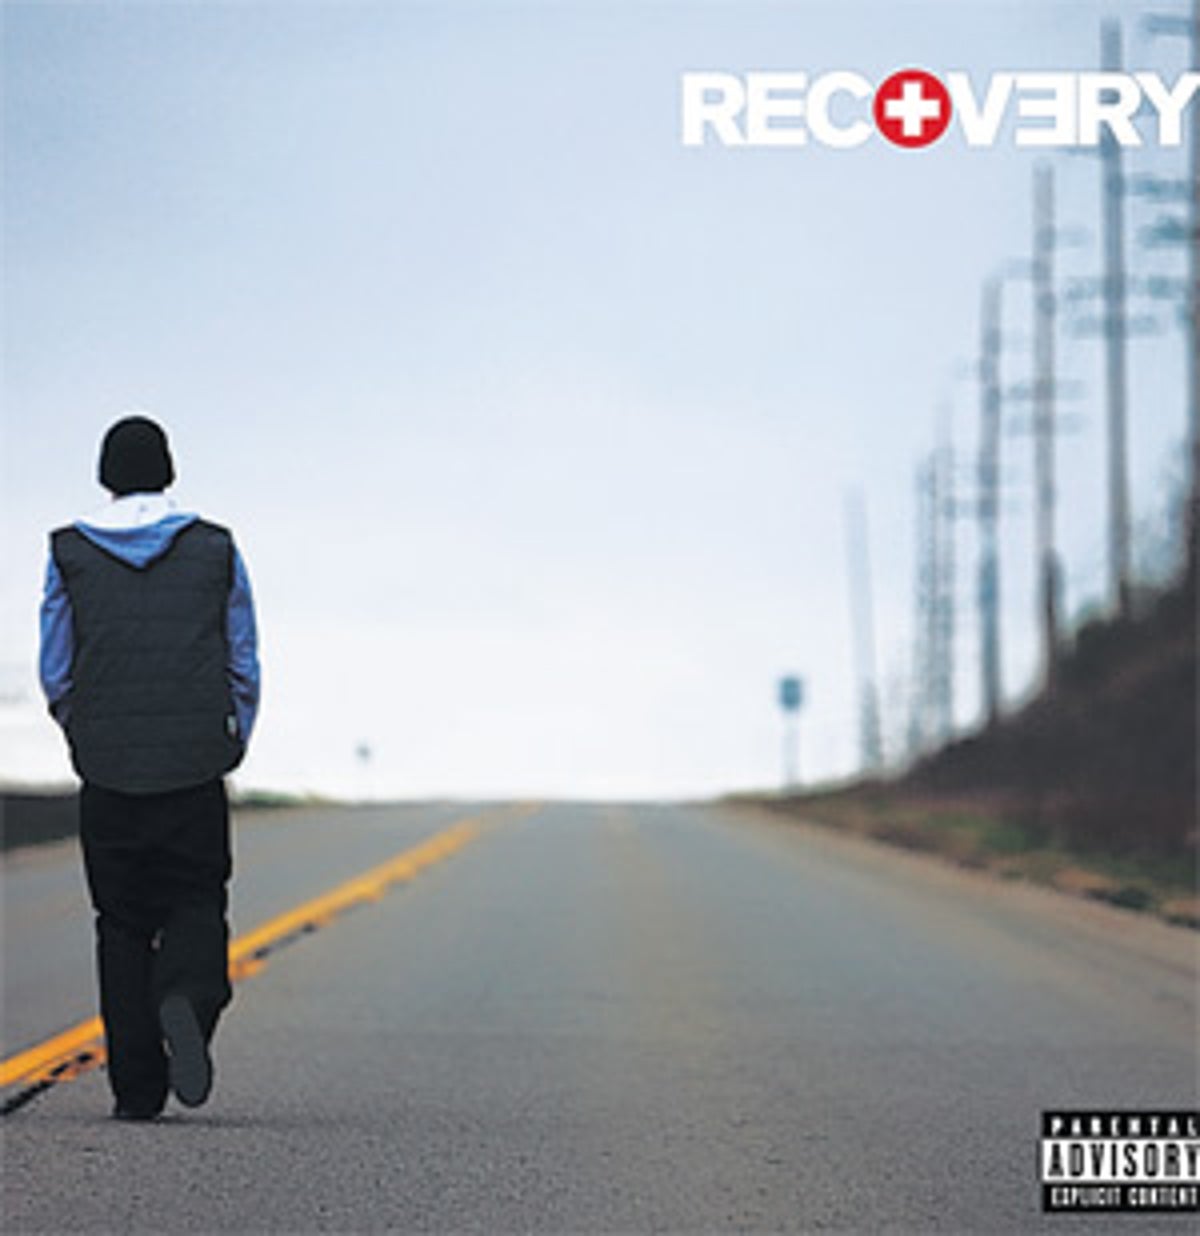 Album: Eminem, Recovery, (Aftermath/Interscope)